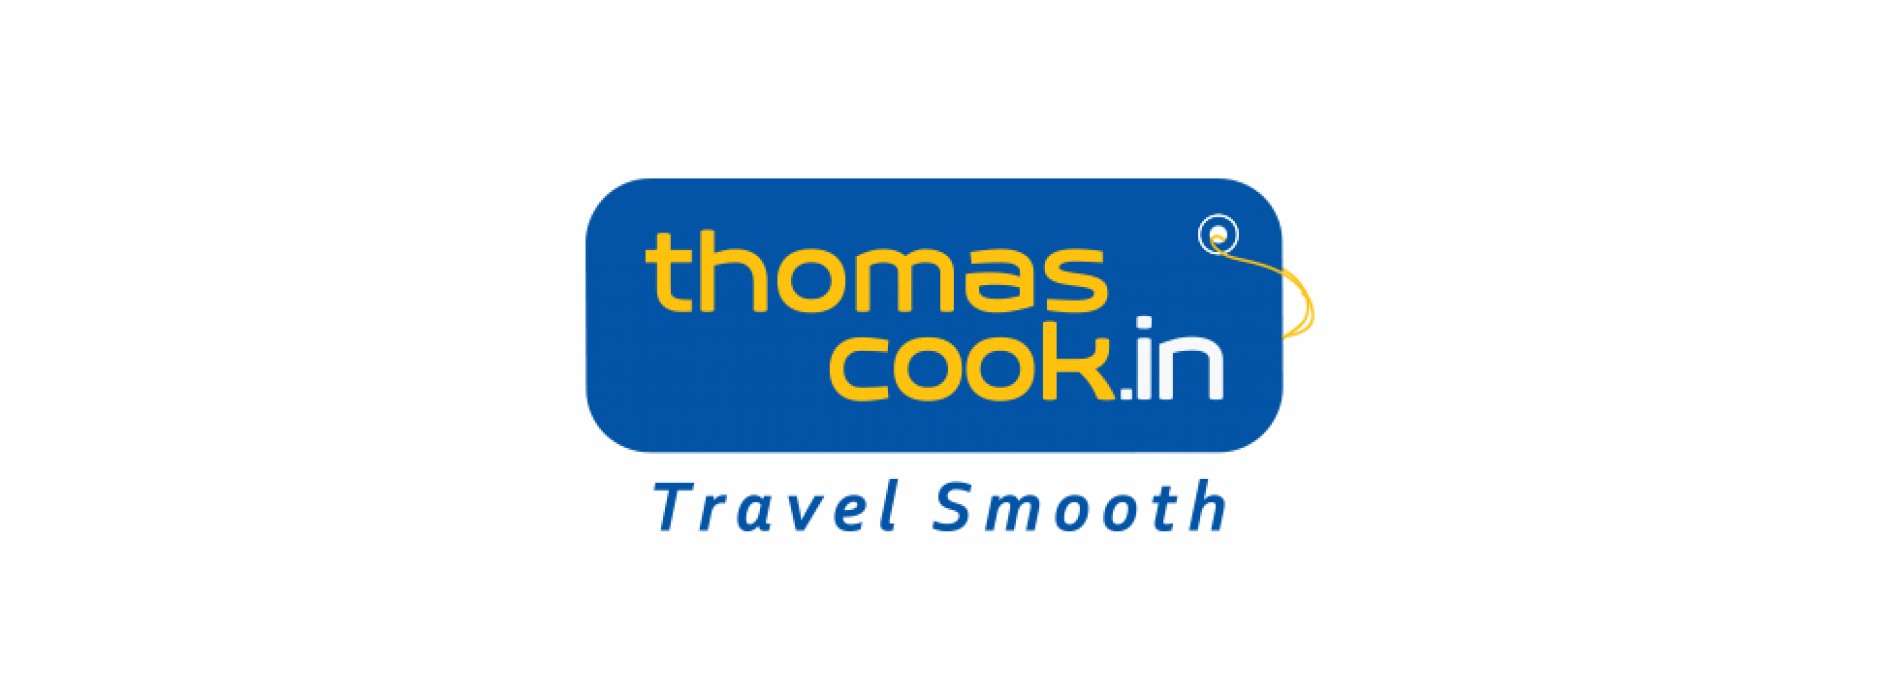 Thomas Cook India eyes domestic travel market opportunity